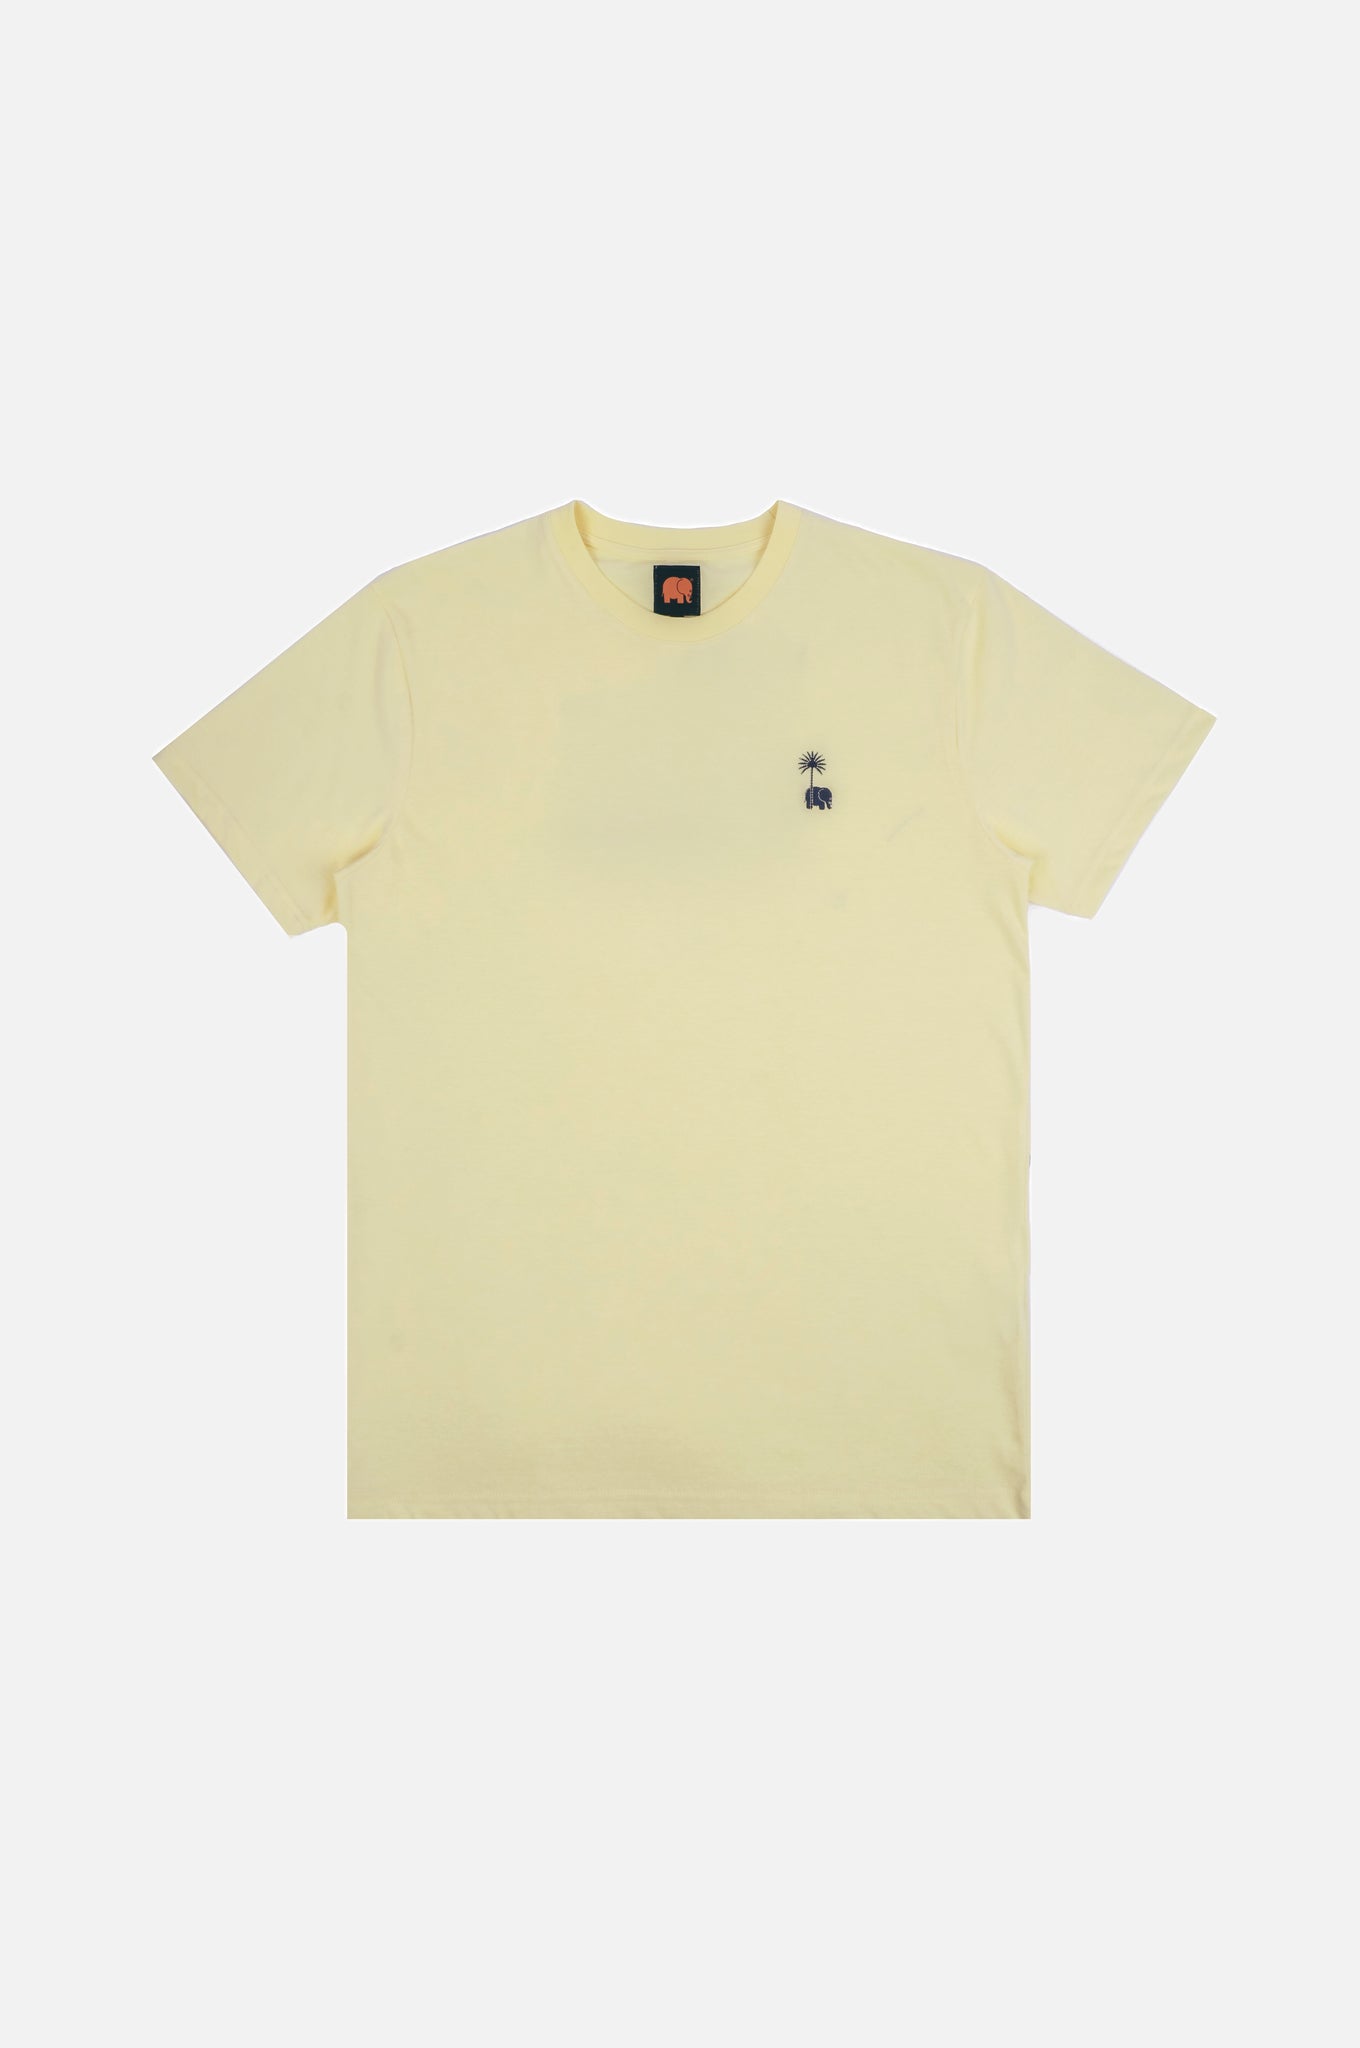 Antonyo Marest x Trendsplant Sketch T-Shirt Pastel Yellow